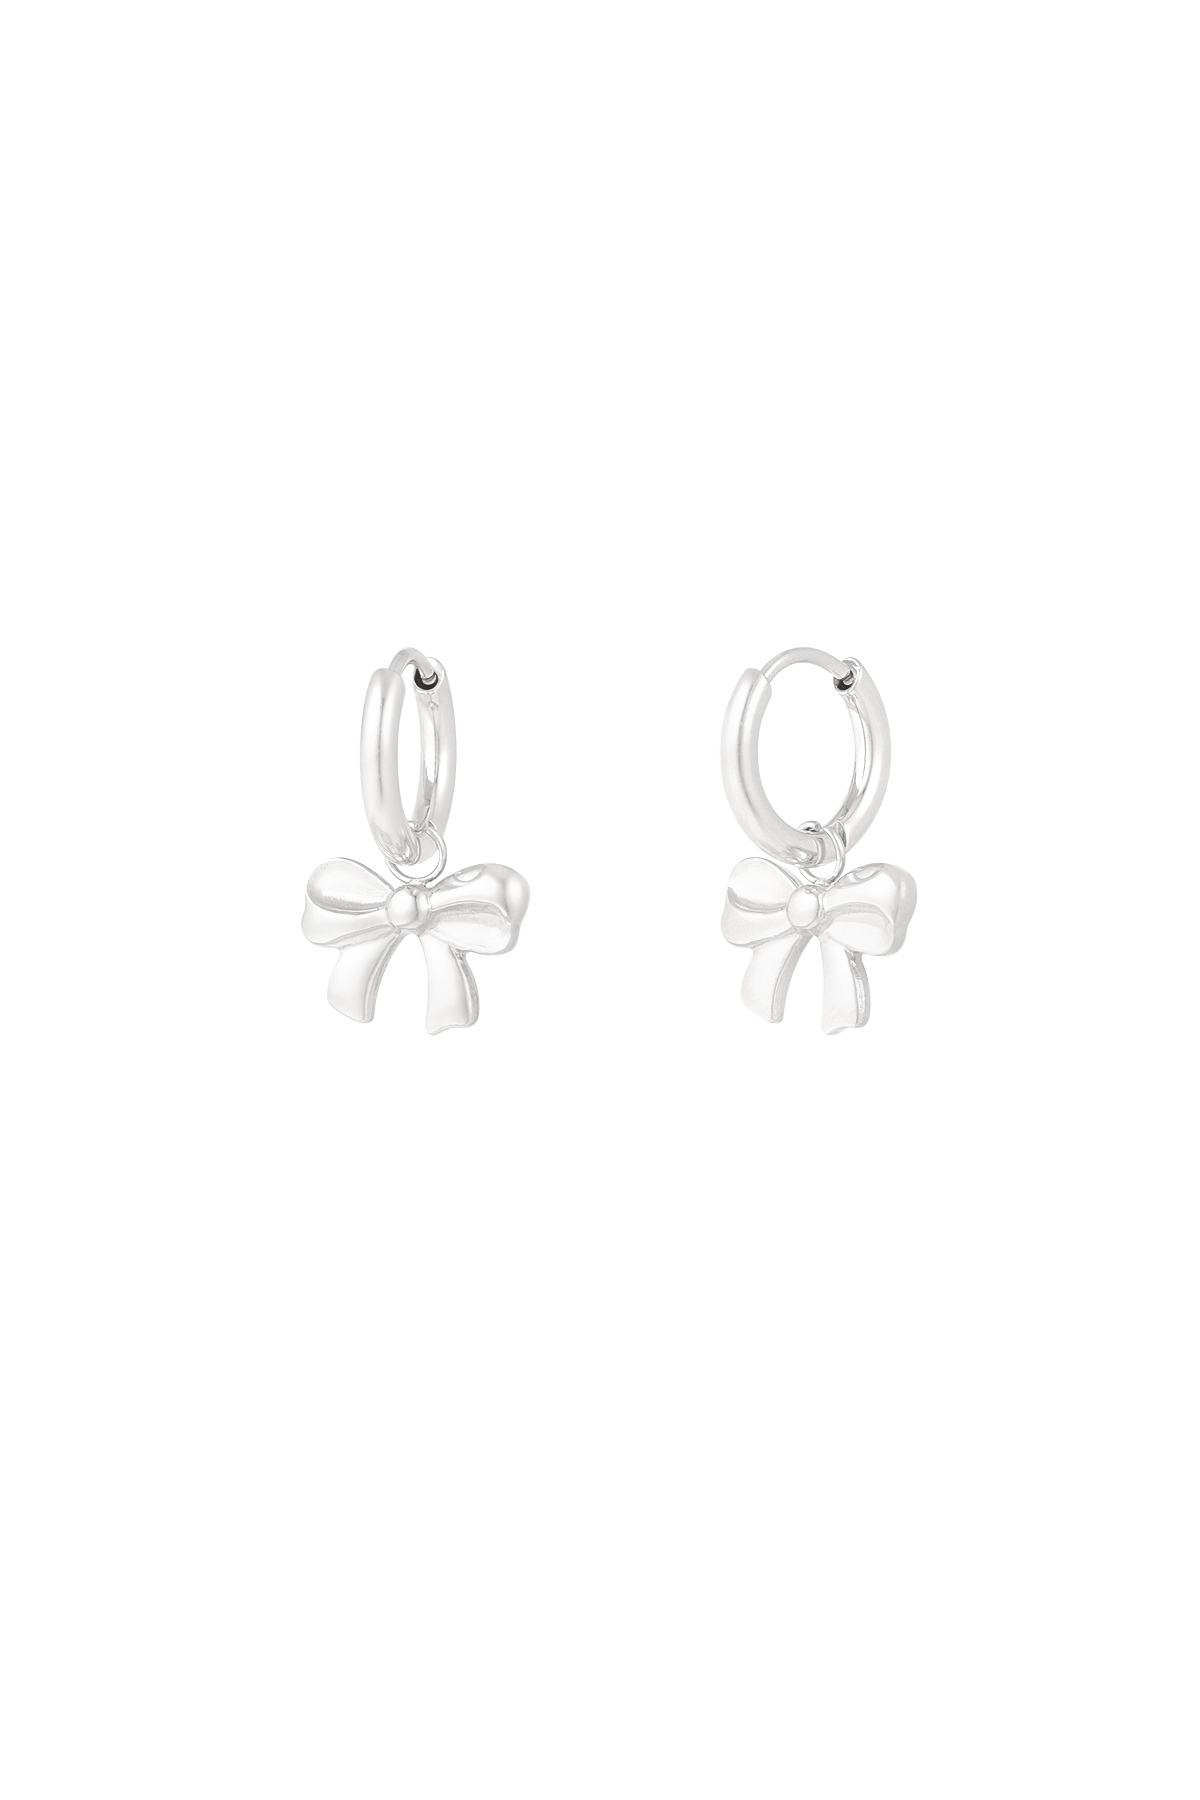 Earrings simple bow - silver h5 